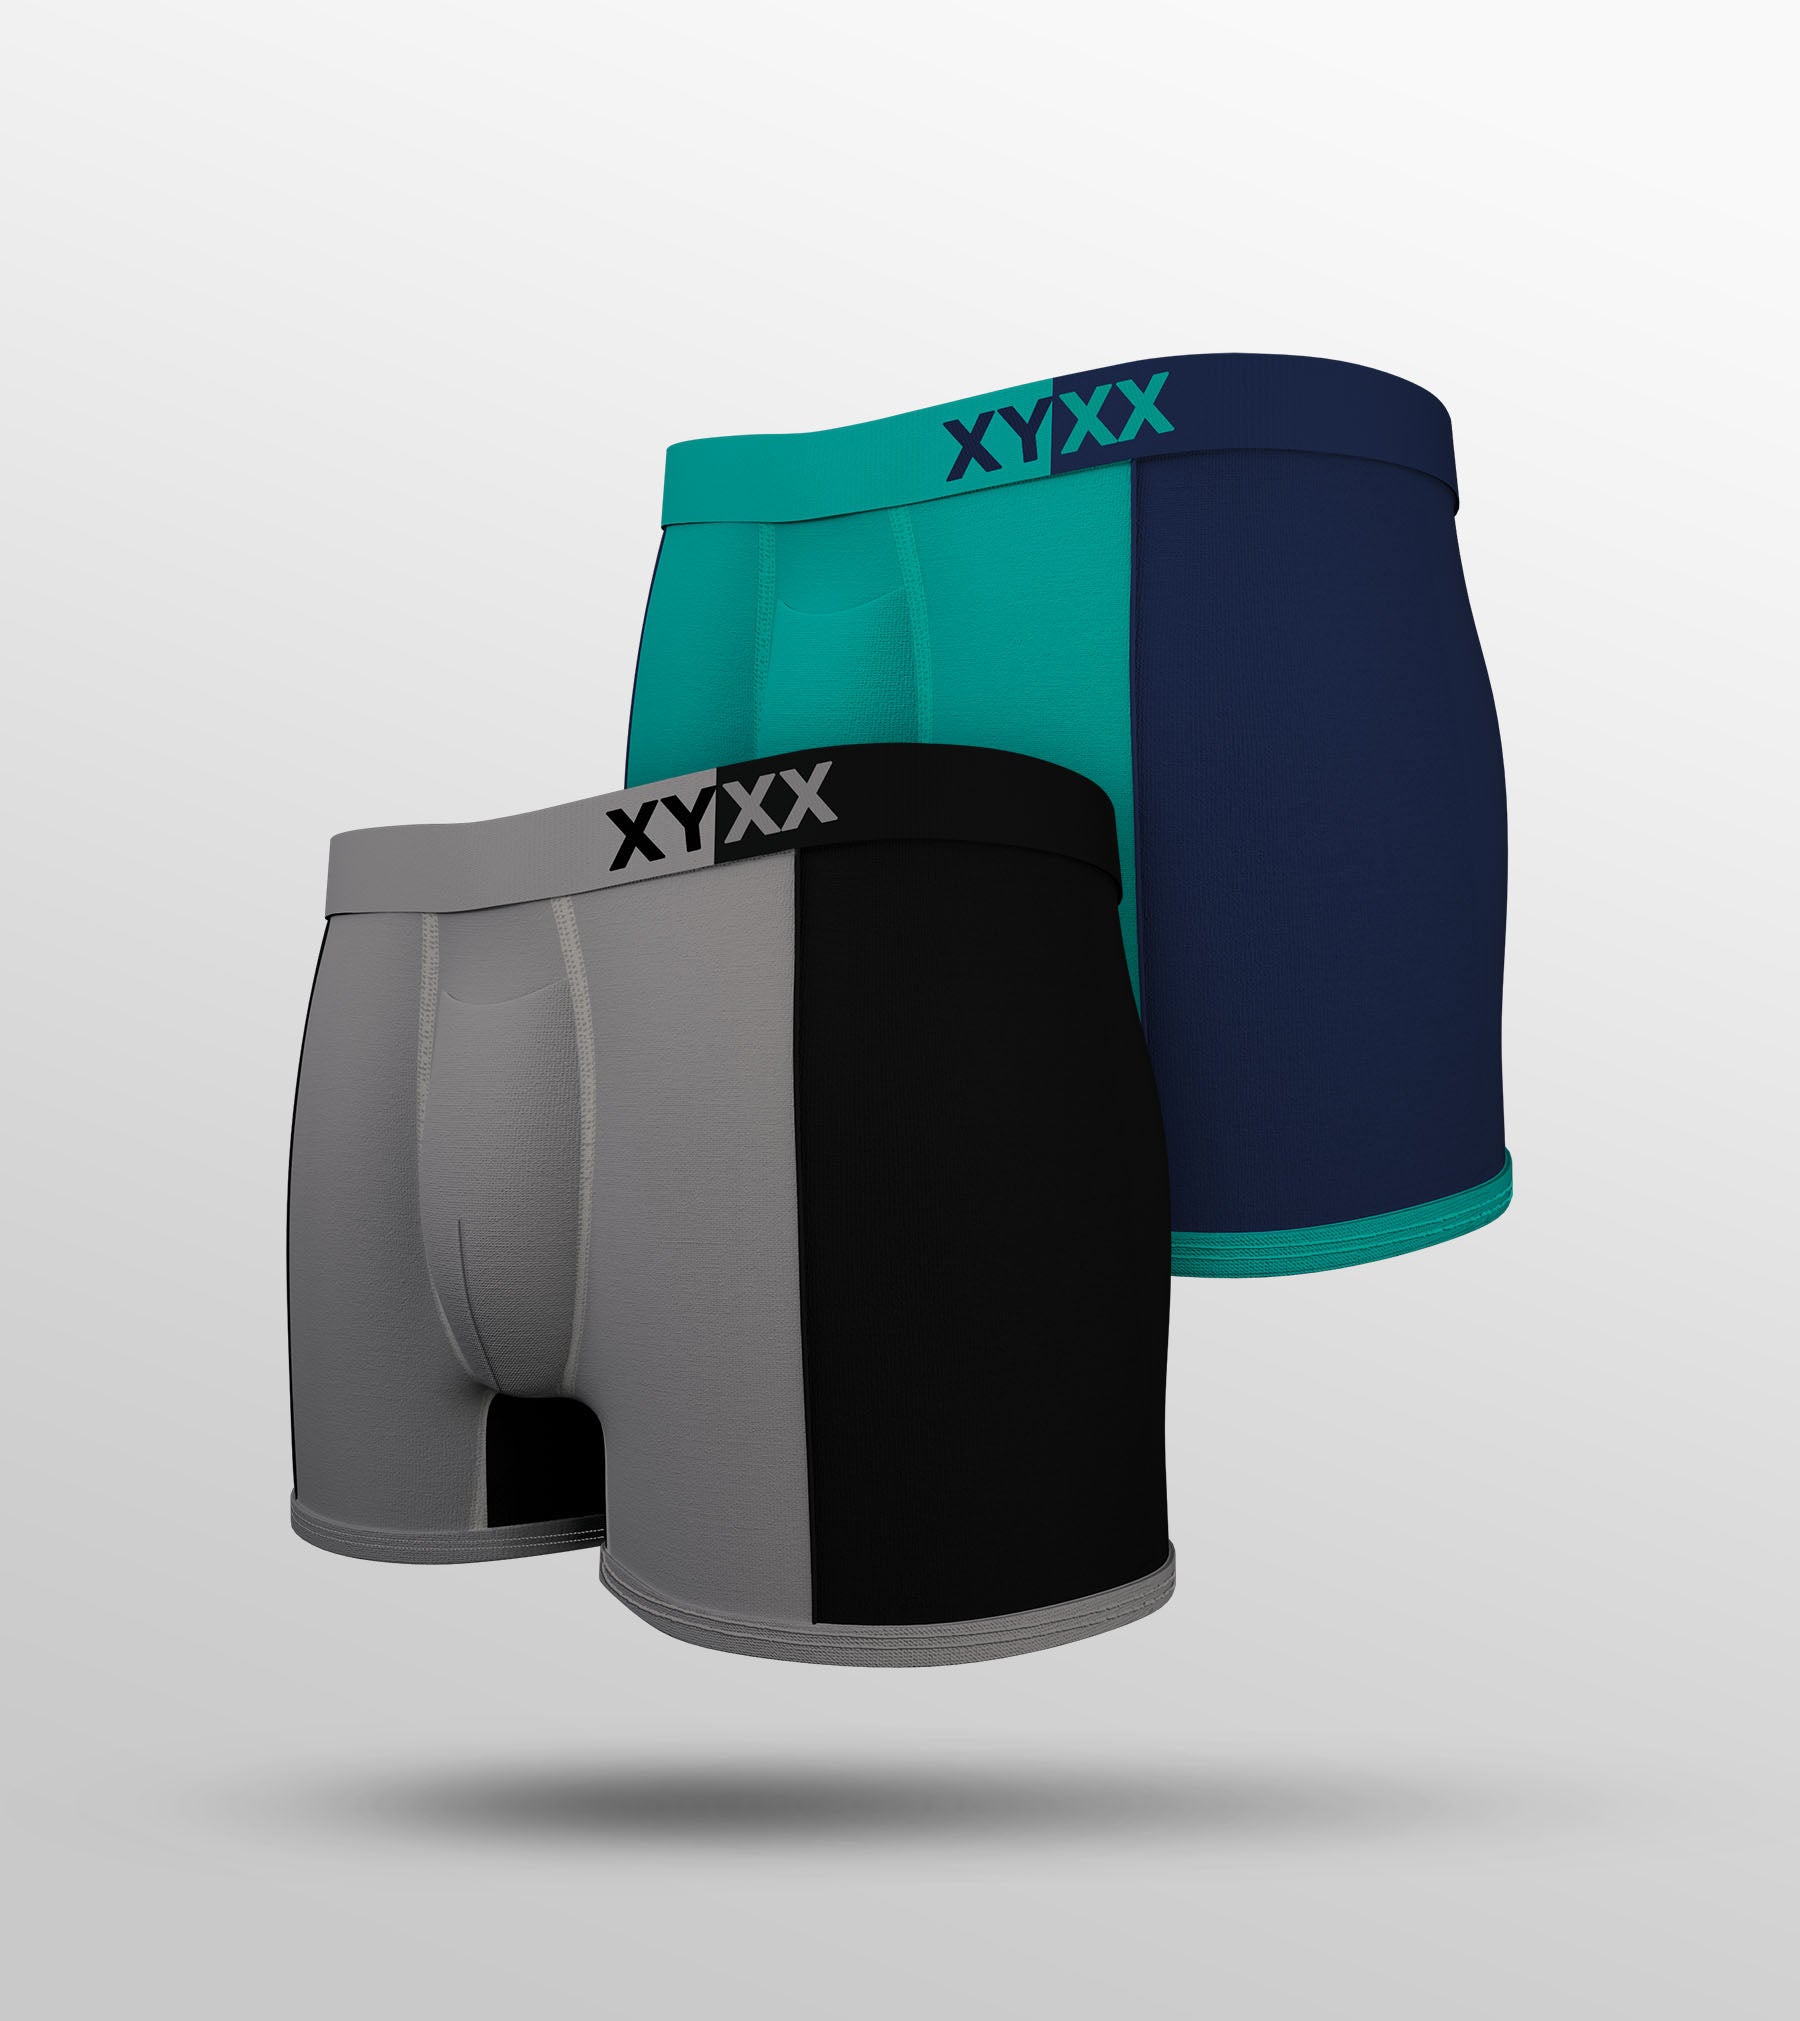 Dualist Modal Trunks For Men Pack of 2 (Grey, Aqua Blue) -  XYXX Mens Apparels